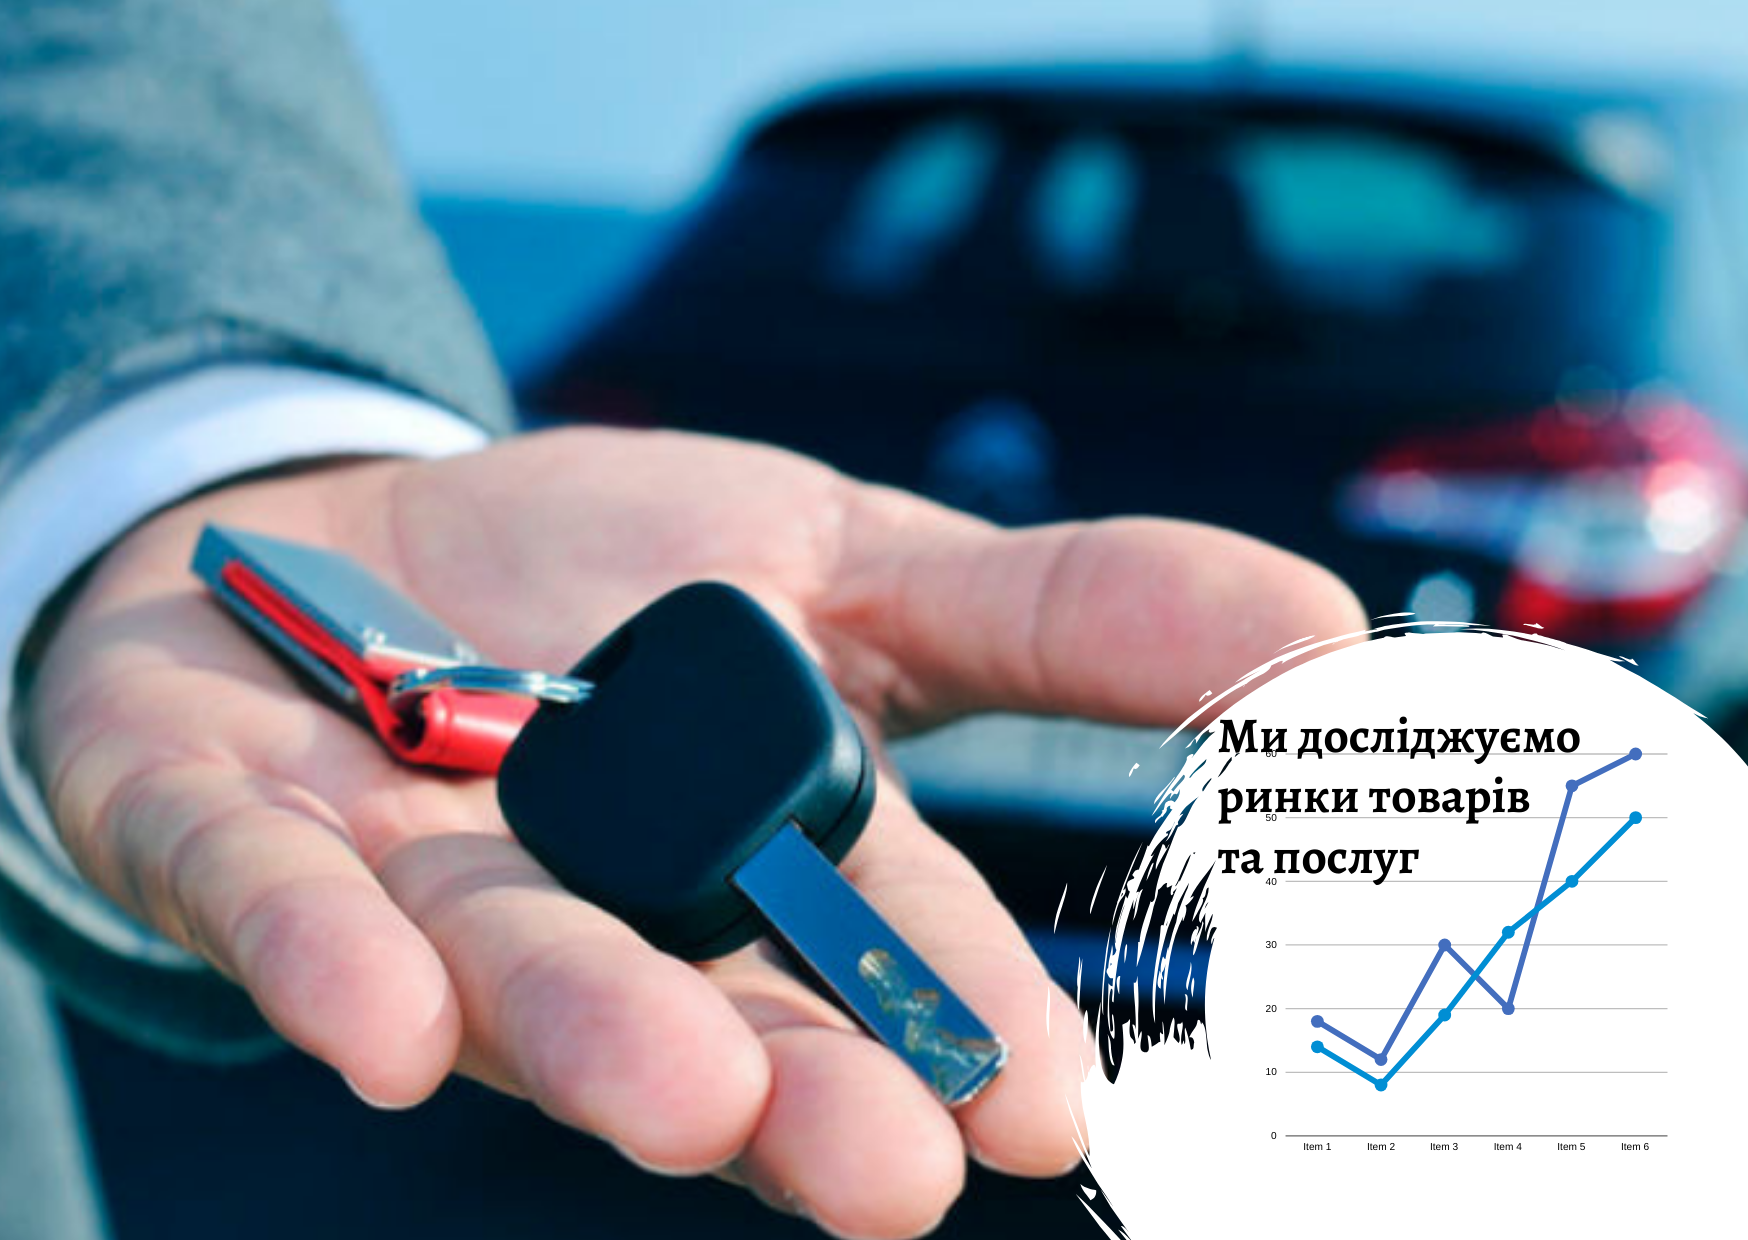 Ukrainian car rental market: estimation